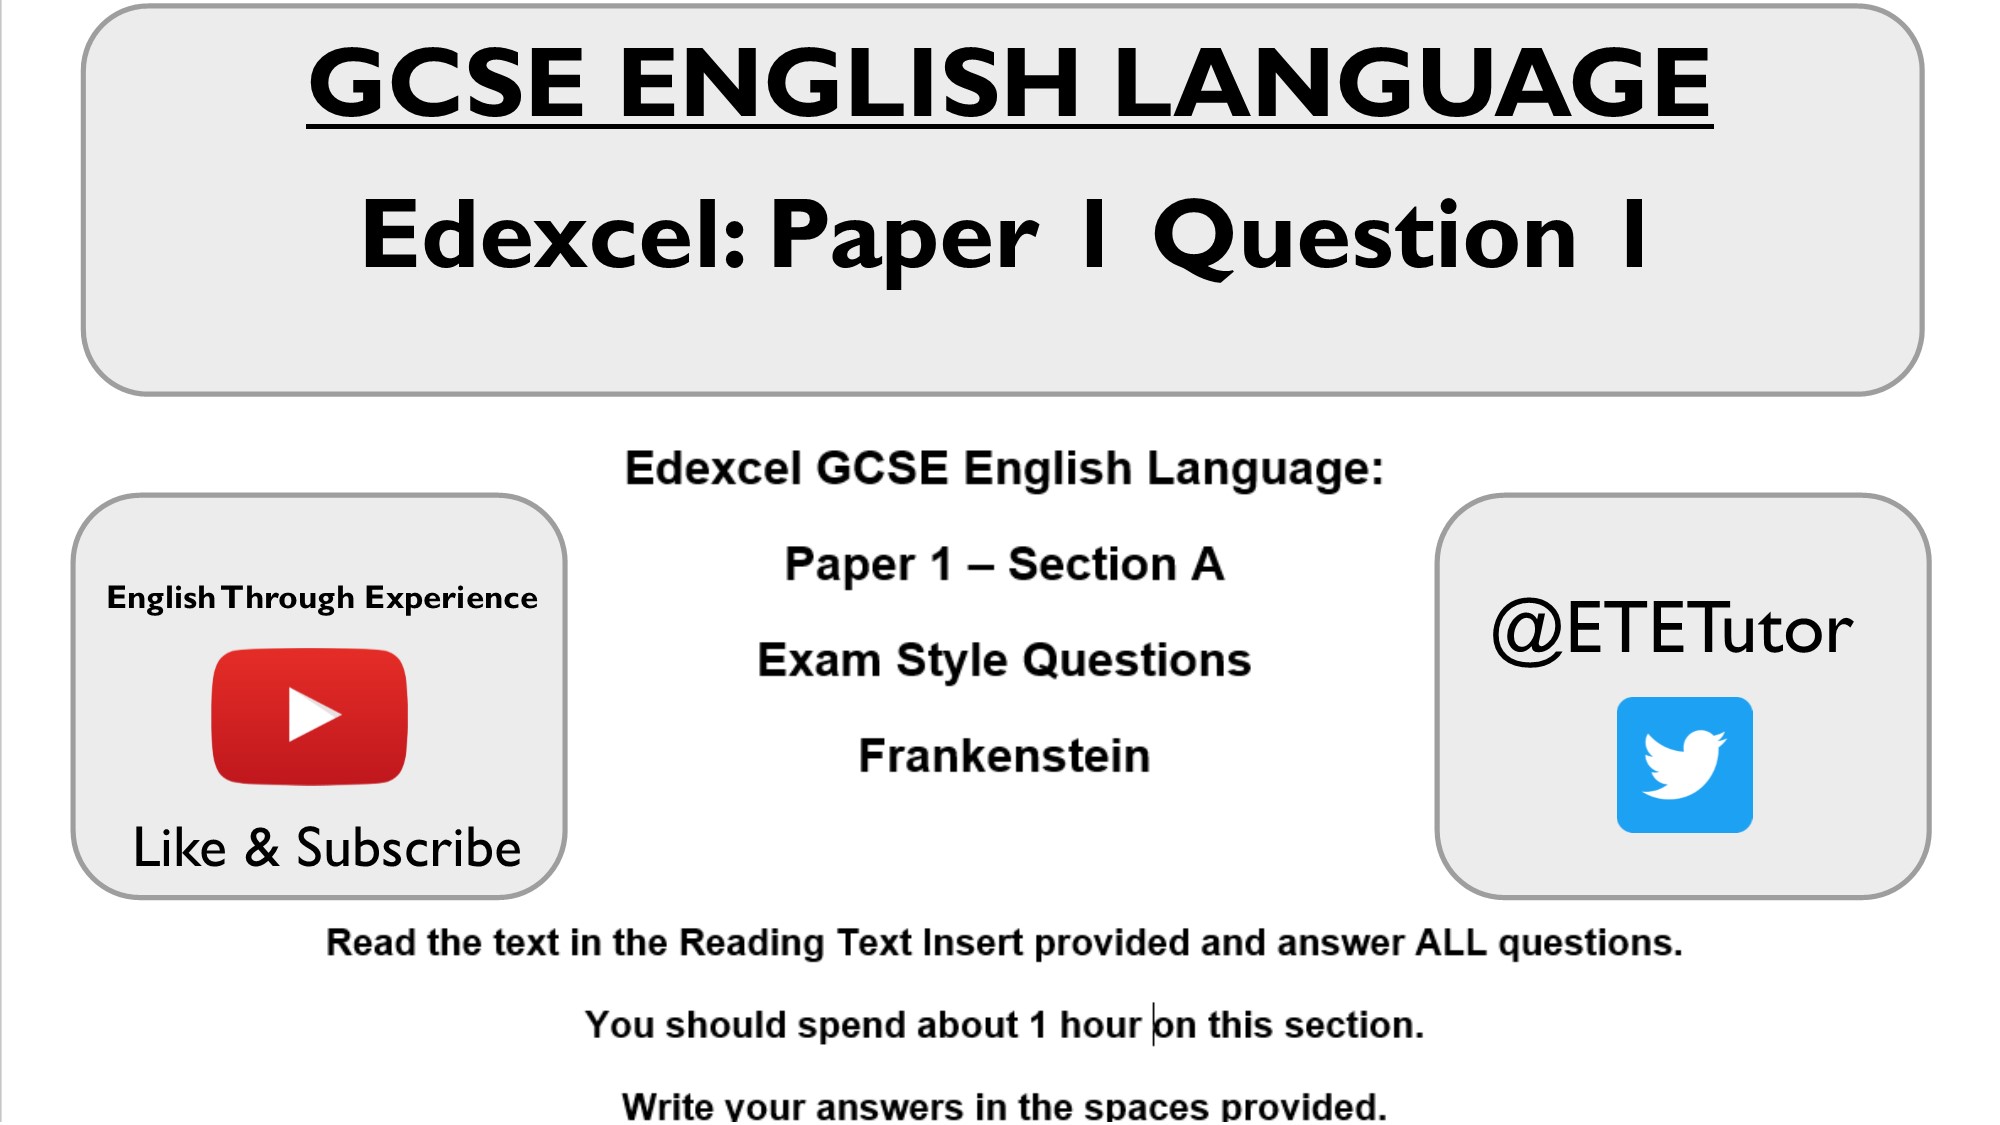 GCSE English language. Техподдержка на английском. Критерии paper 1 language a. Офферы английский язык. Support на английском